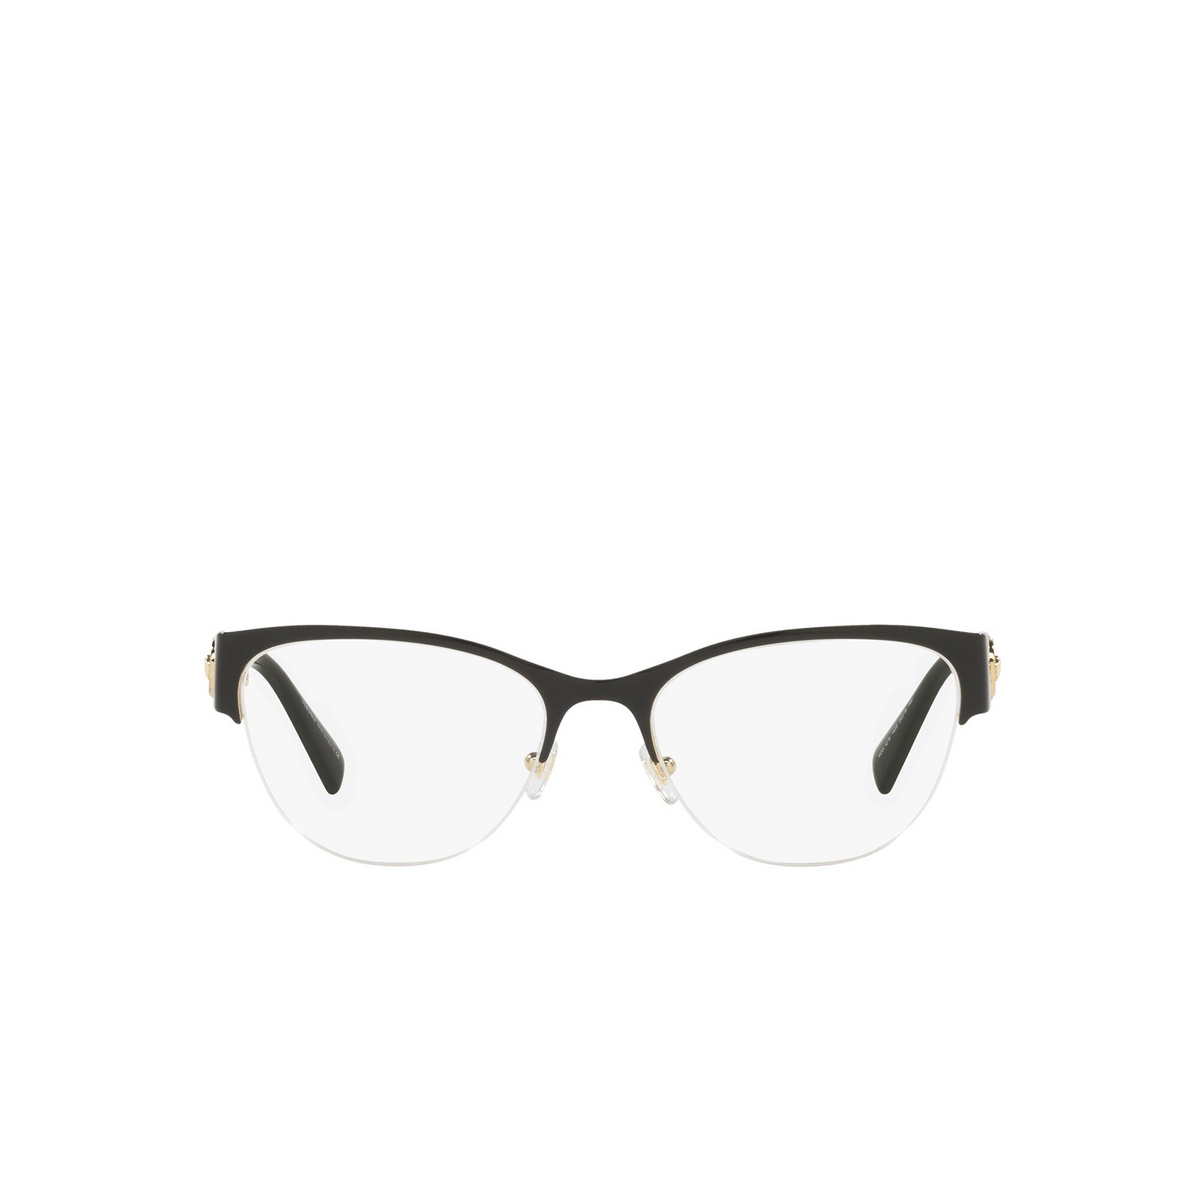 Versace® Cat-eye Eyeglasses: VE1278 color Black / Gold 1433 - front view.